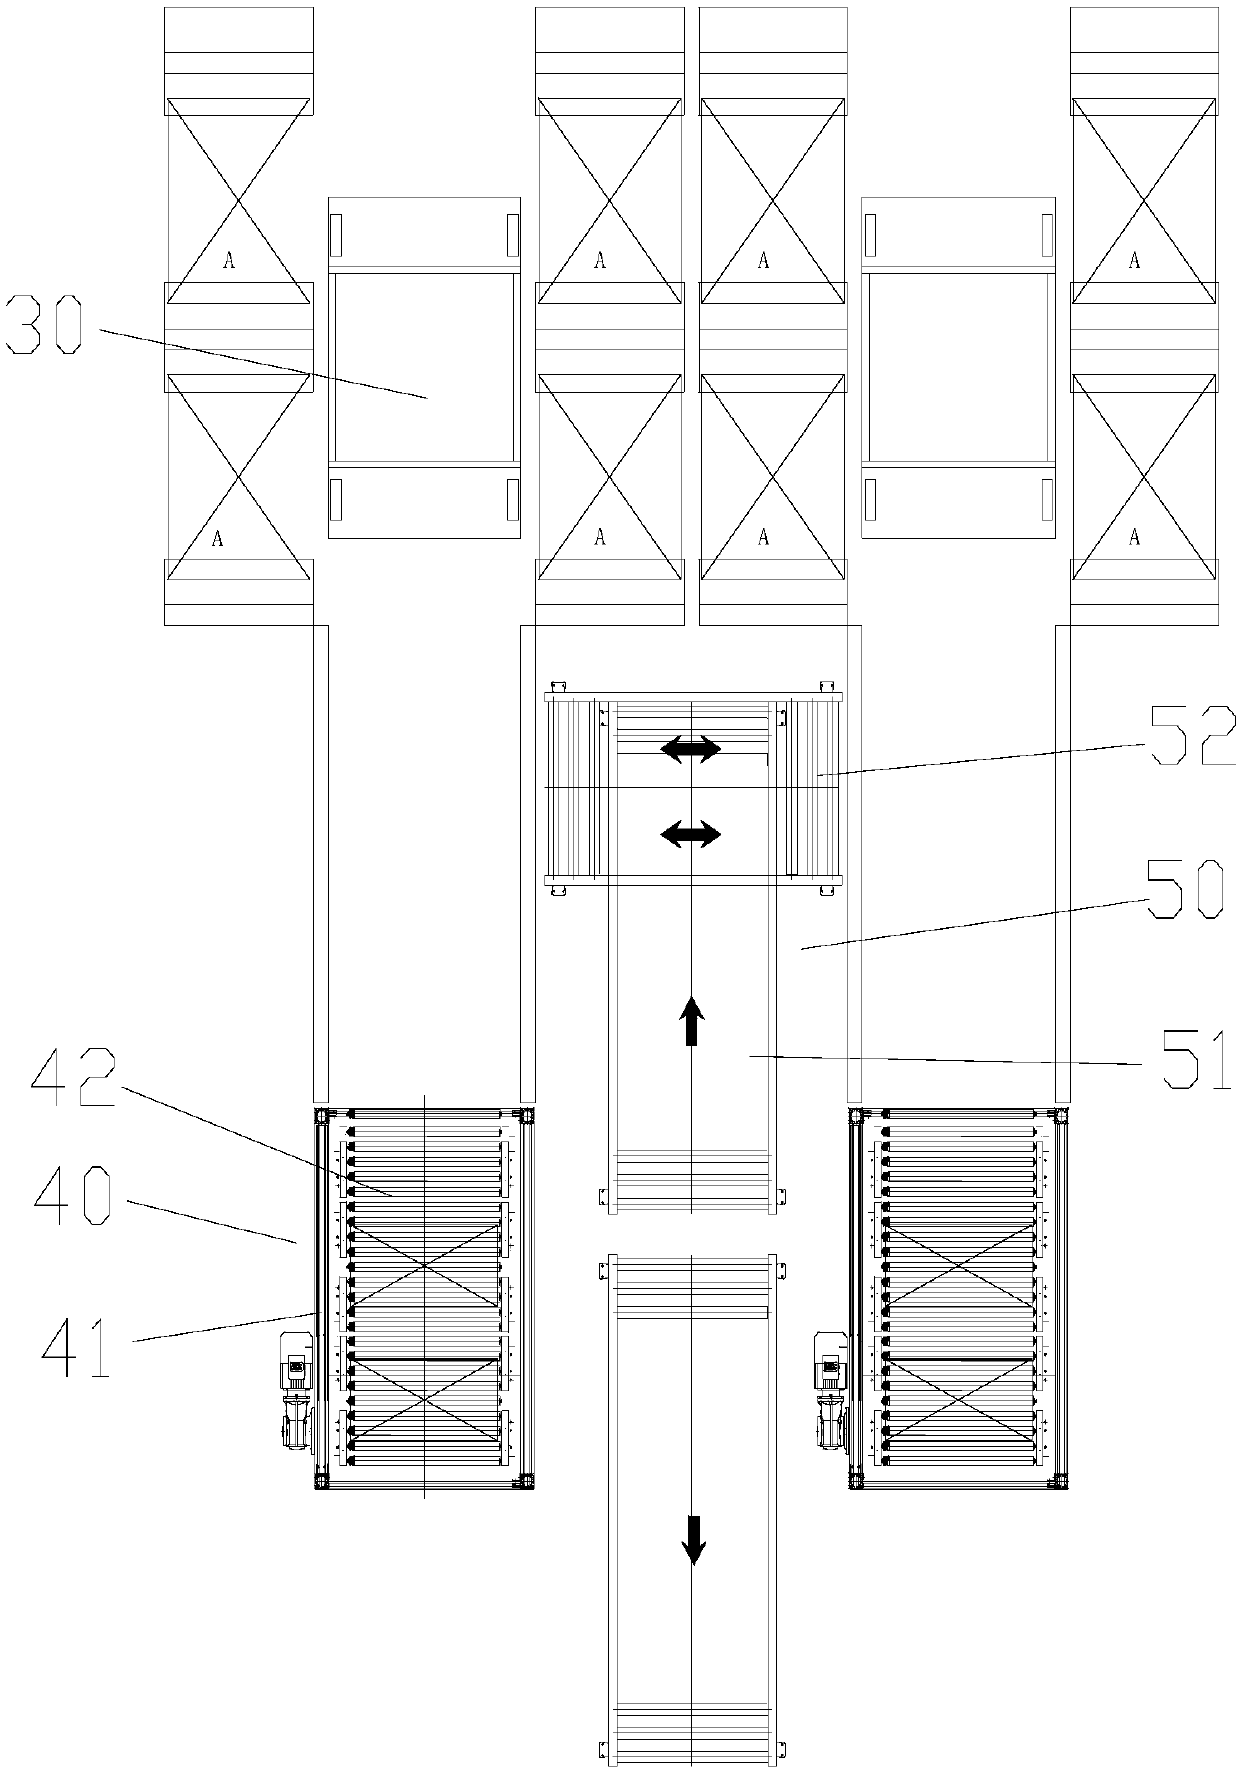 Stereoscopic storehouse system